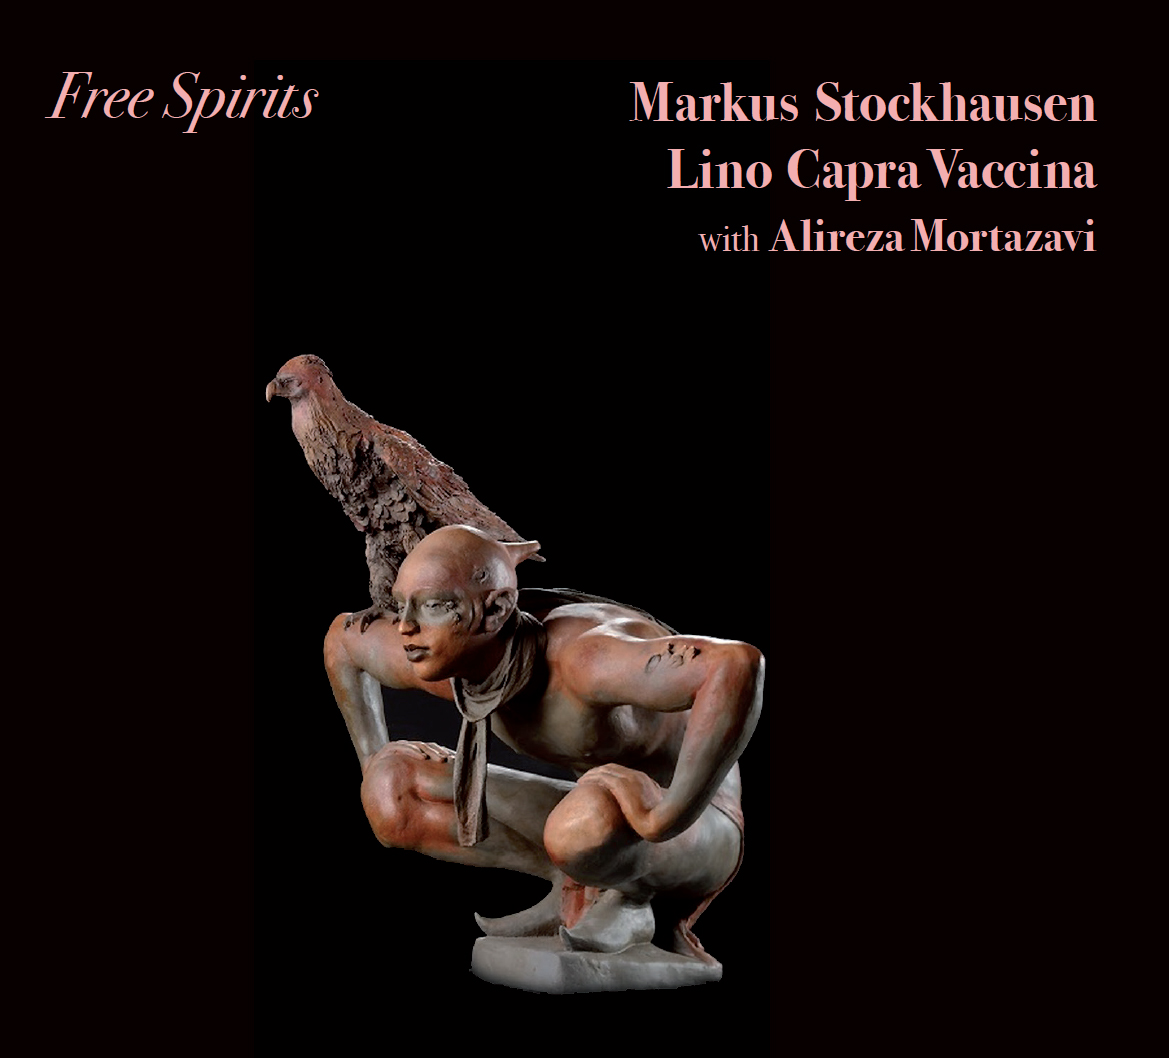 CD Cover: Free Spirits, Markus Stockhausen, Lino Capra Vaccina with Alireza Mortazavi